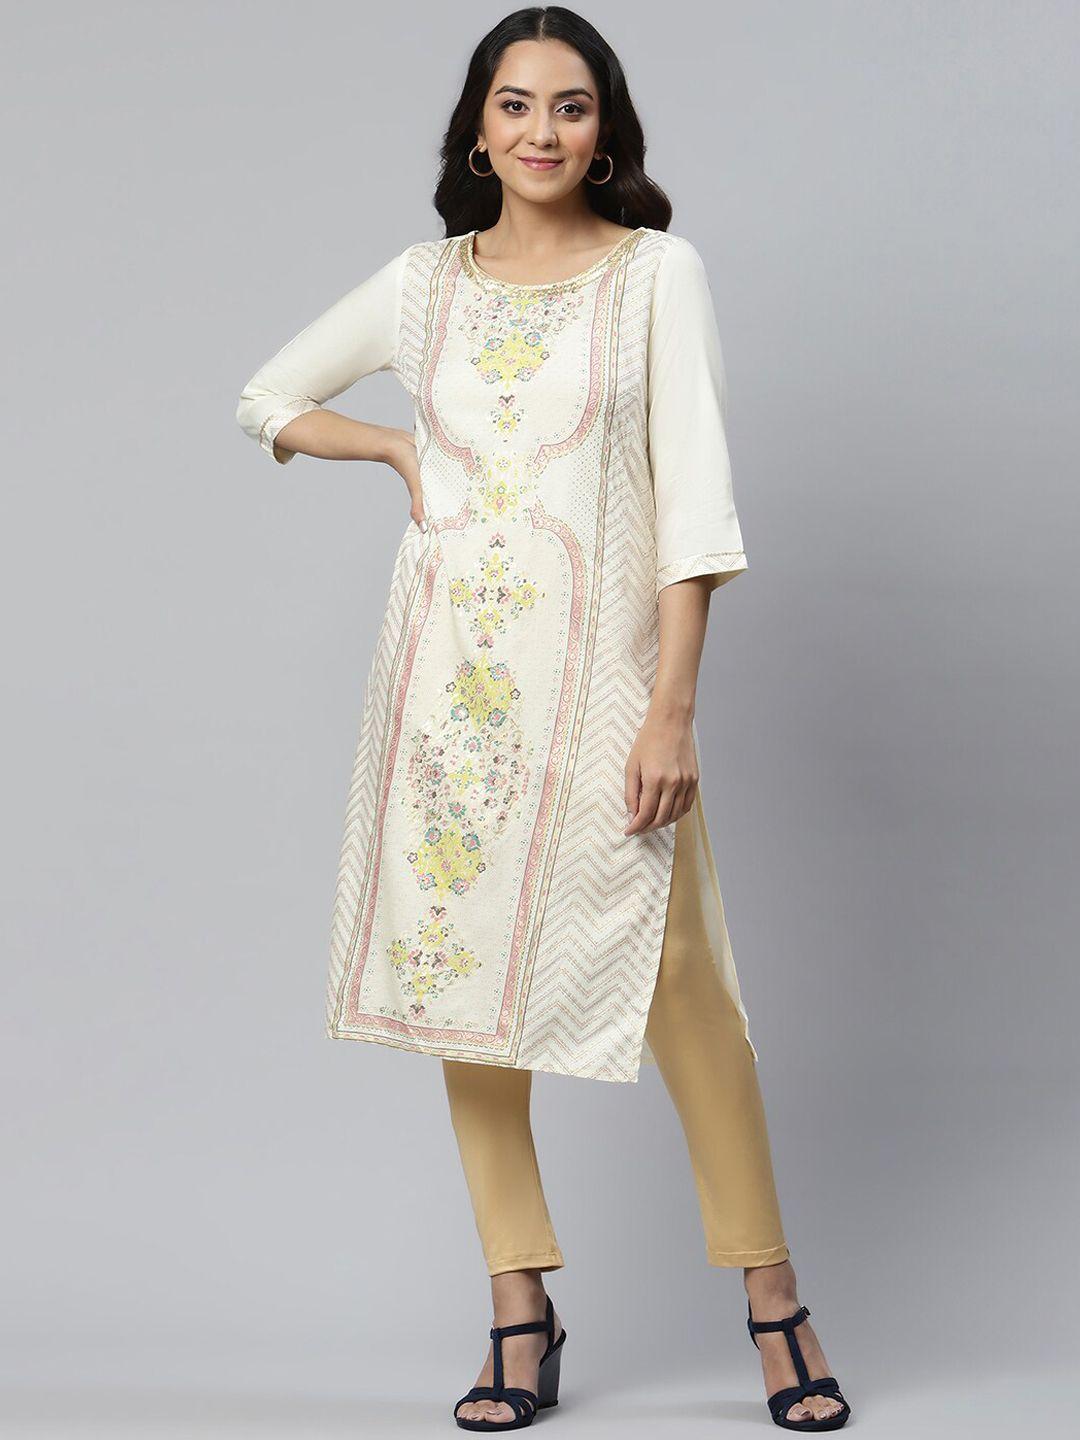 aurelia-women-white-&-yellow-ethnic-motifs-embroidered-floral-handloom-kurta